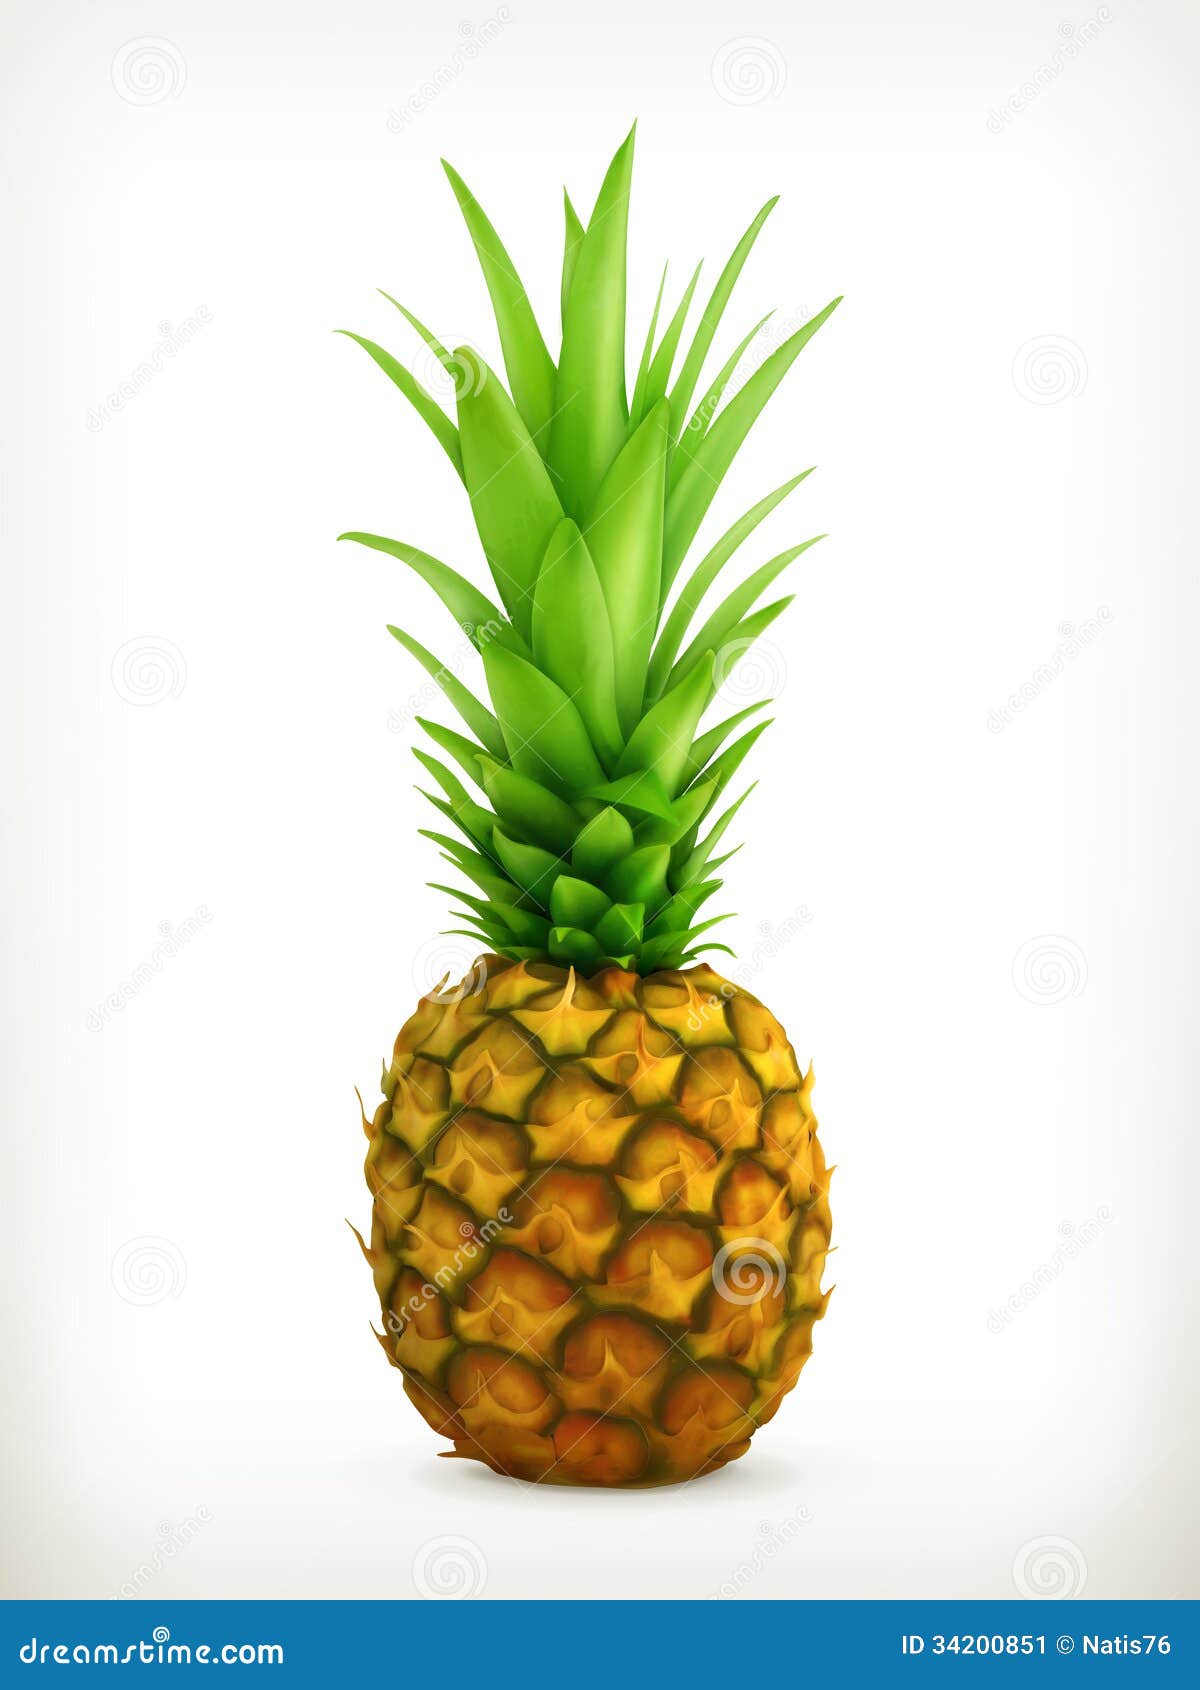 Pineapple Stock Image - Image: 34200851